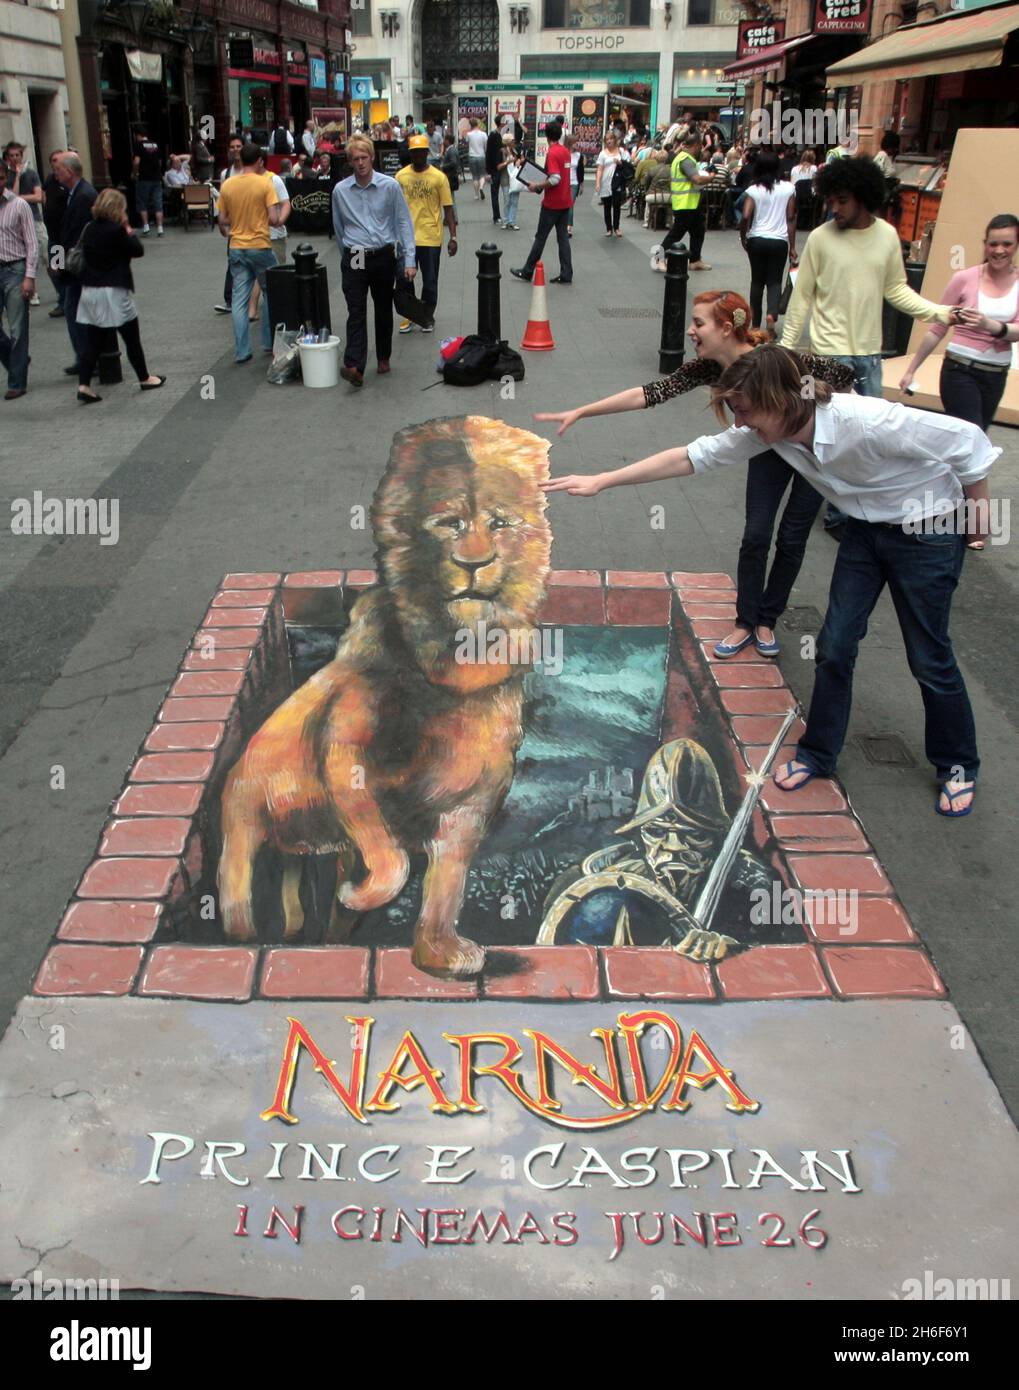 For Narnia and for Aslan Struppi101 - Illustrations ART street